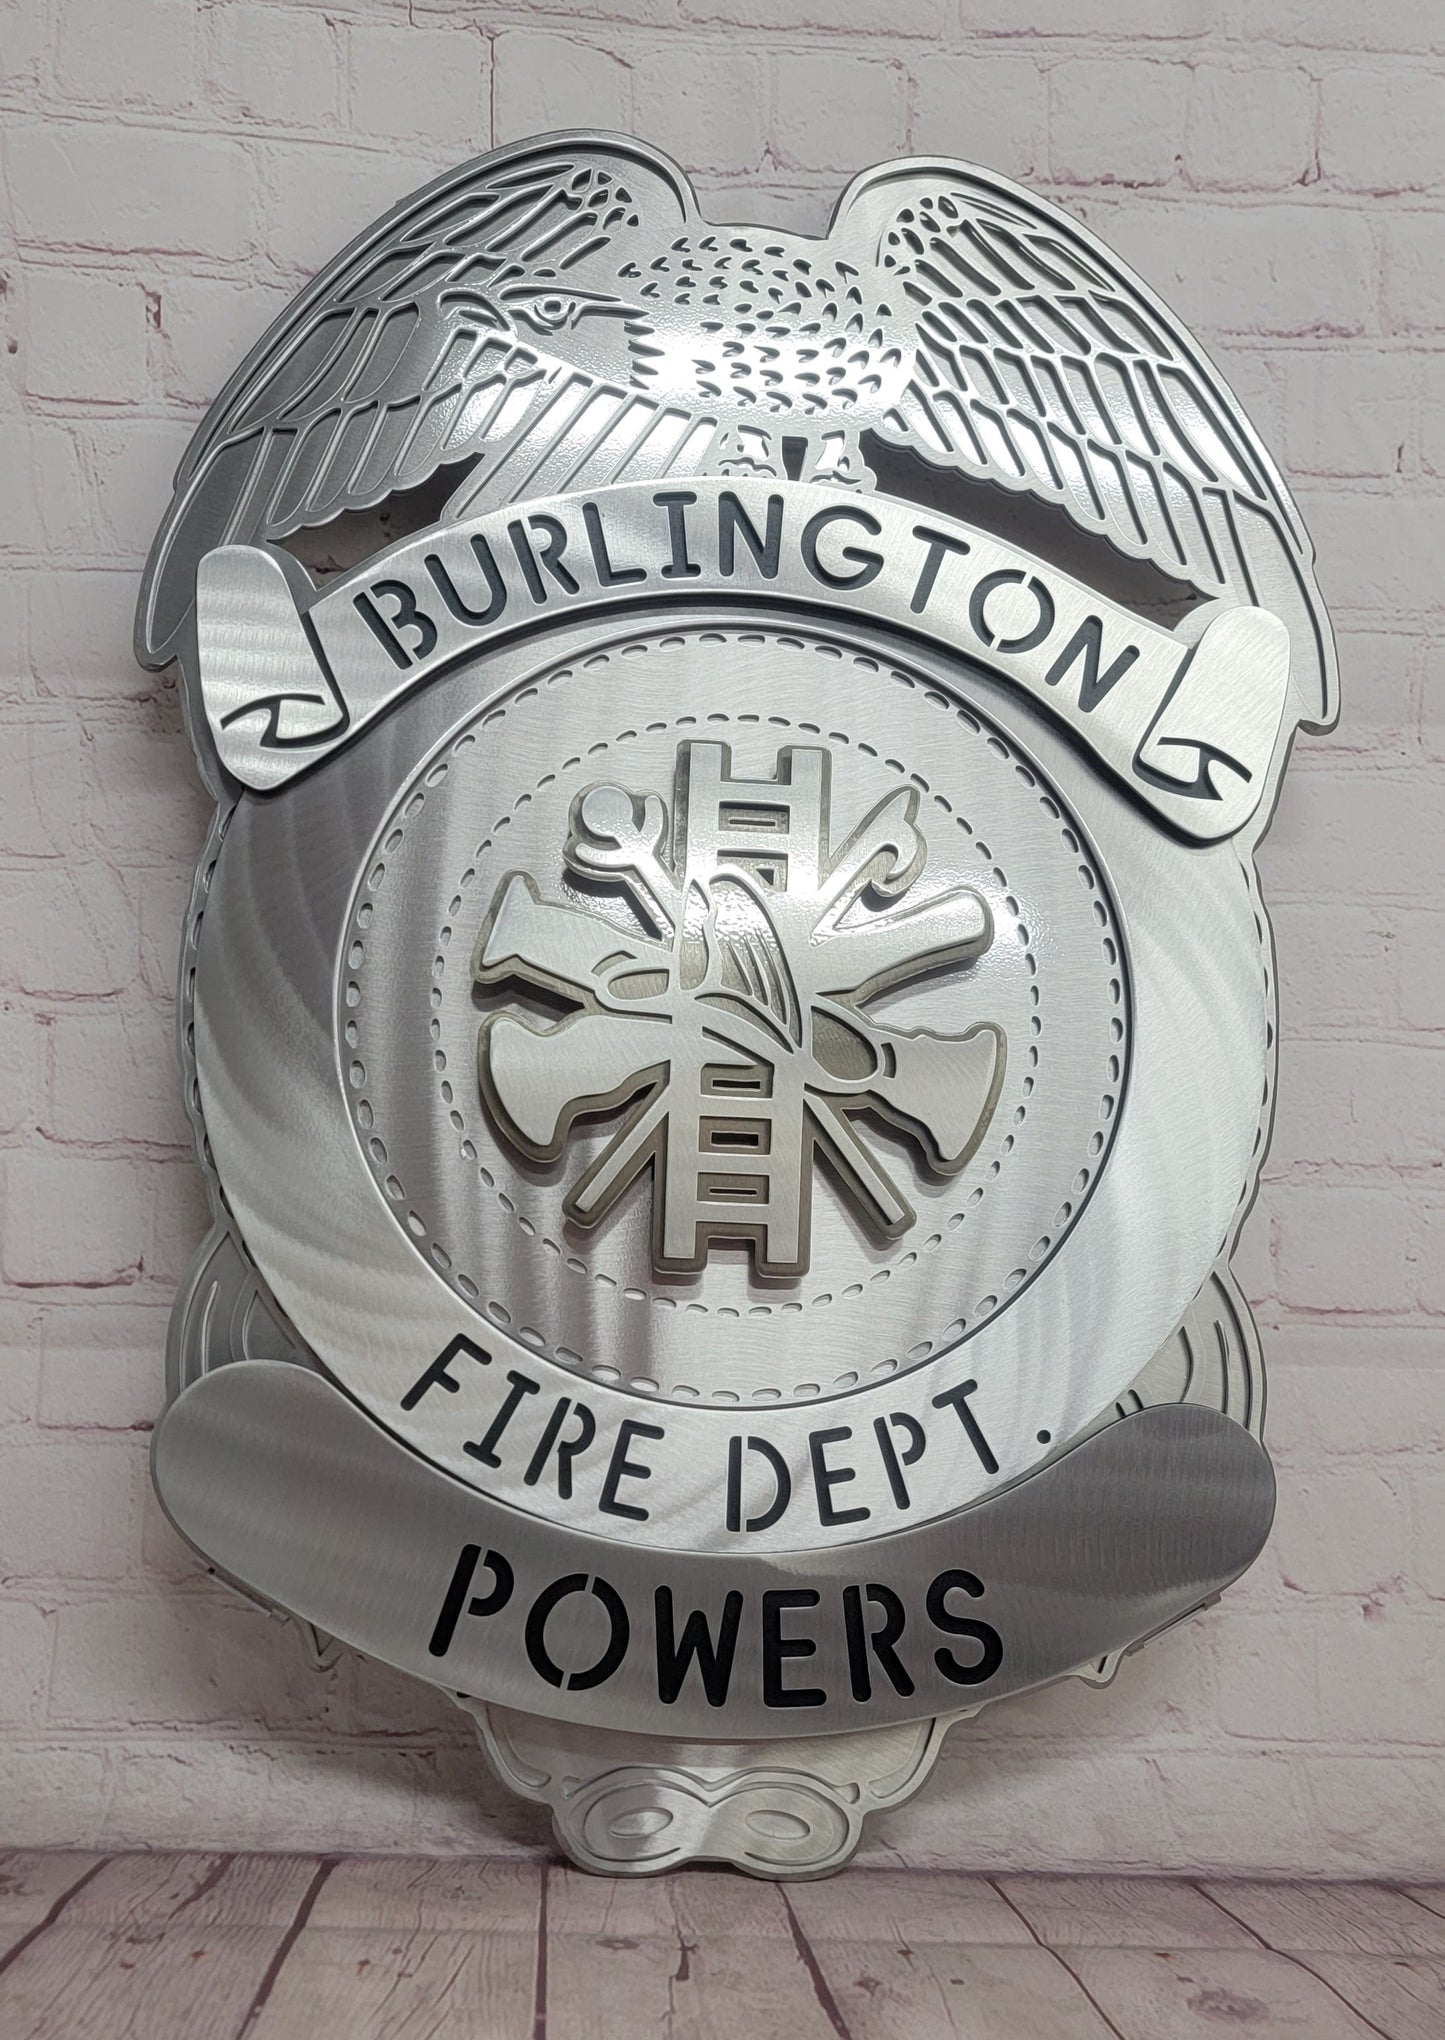 Burlington Powers Fire Dept.